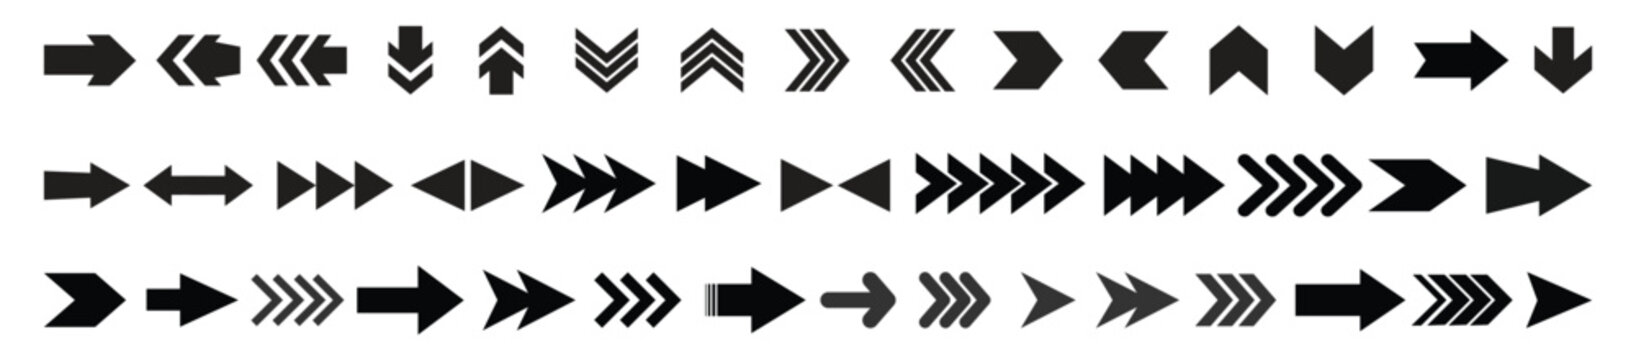 Arrow icon set. Arrow icons. Mega set of vector arrows. Arrows big black set icons. Arrows. Arrow vector collection. Arrow. Cursor. Modern simple arrow symbols in flat style 